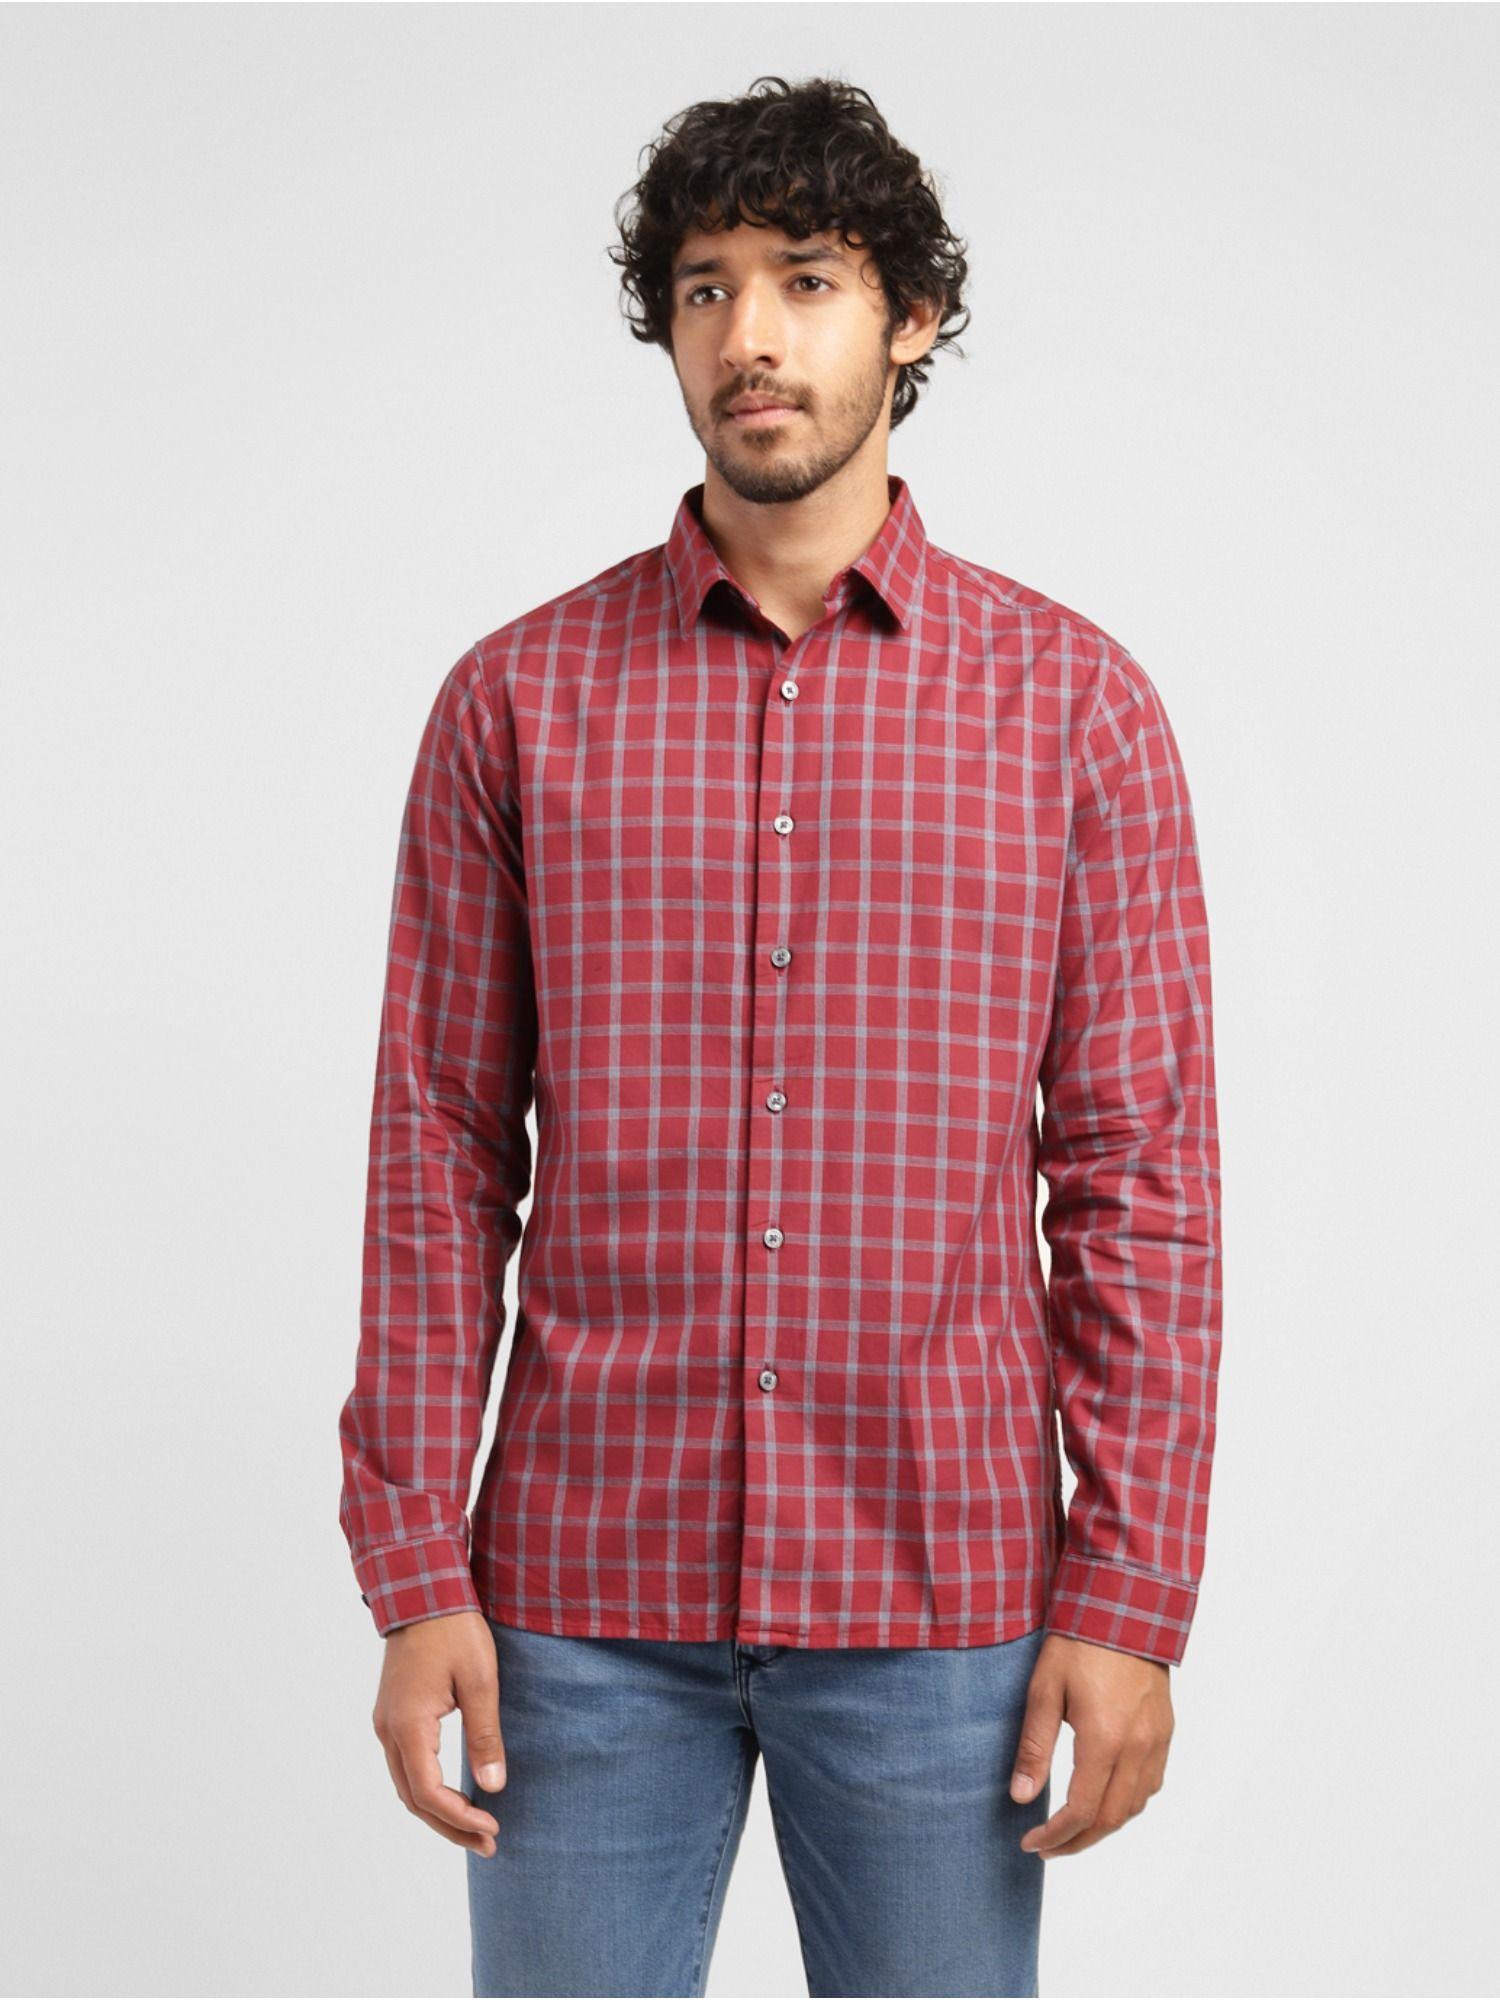 men's-maroon-checkered-slim-fit-shirt